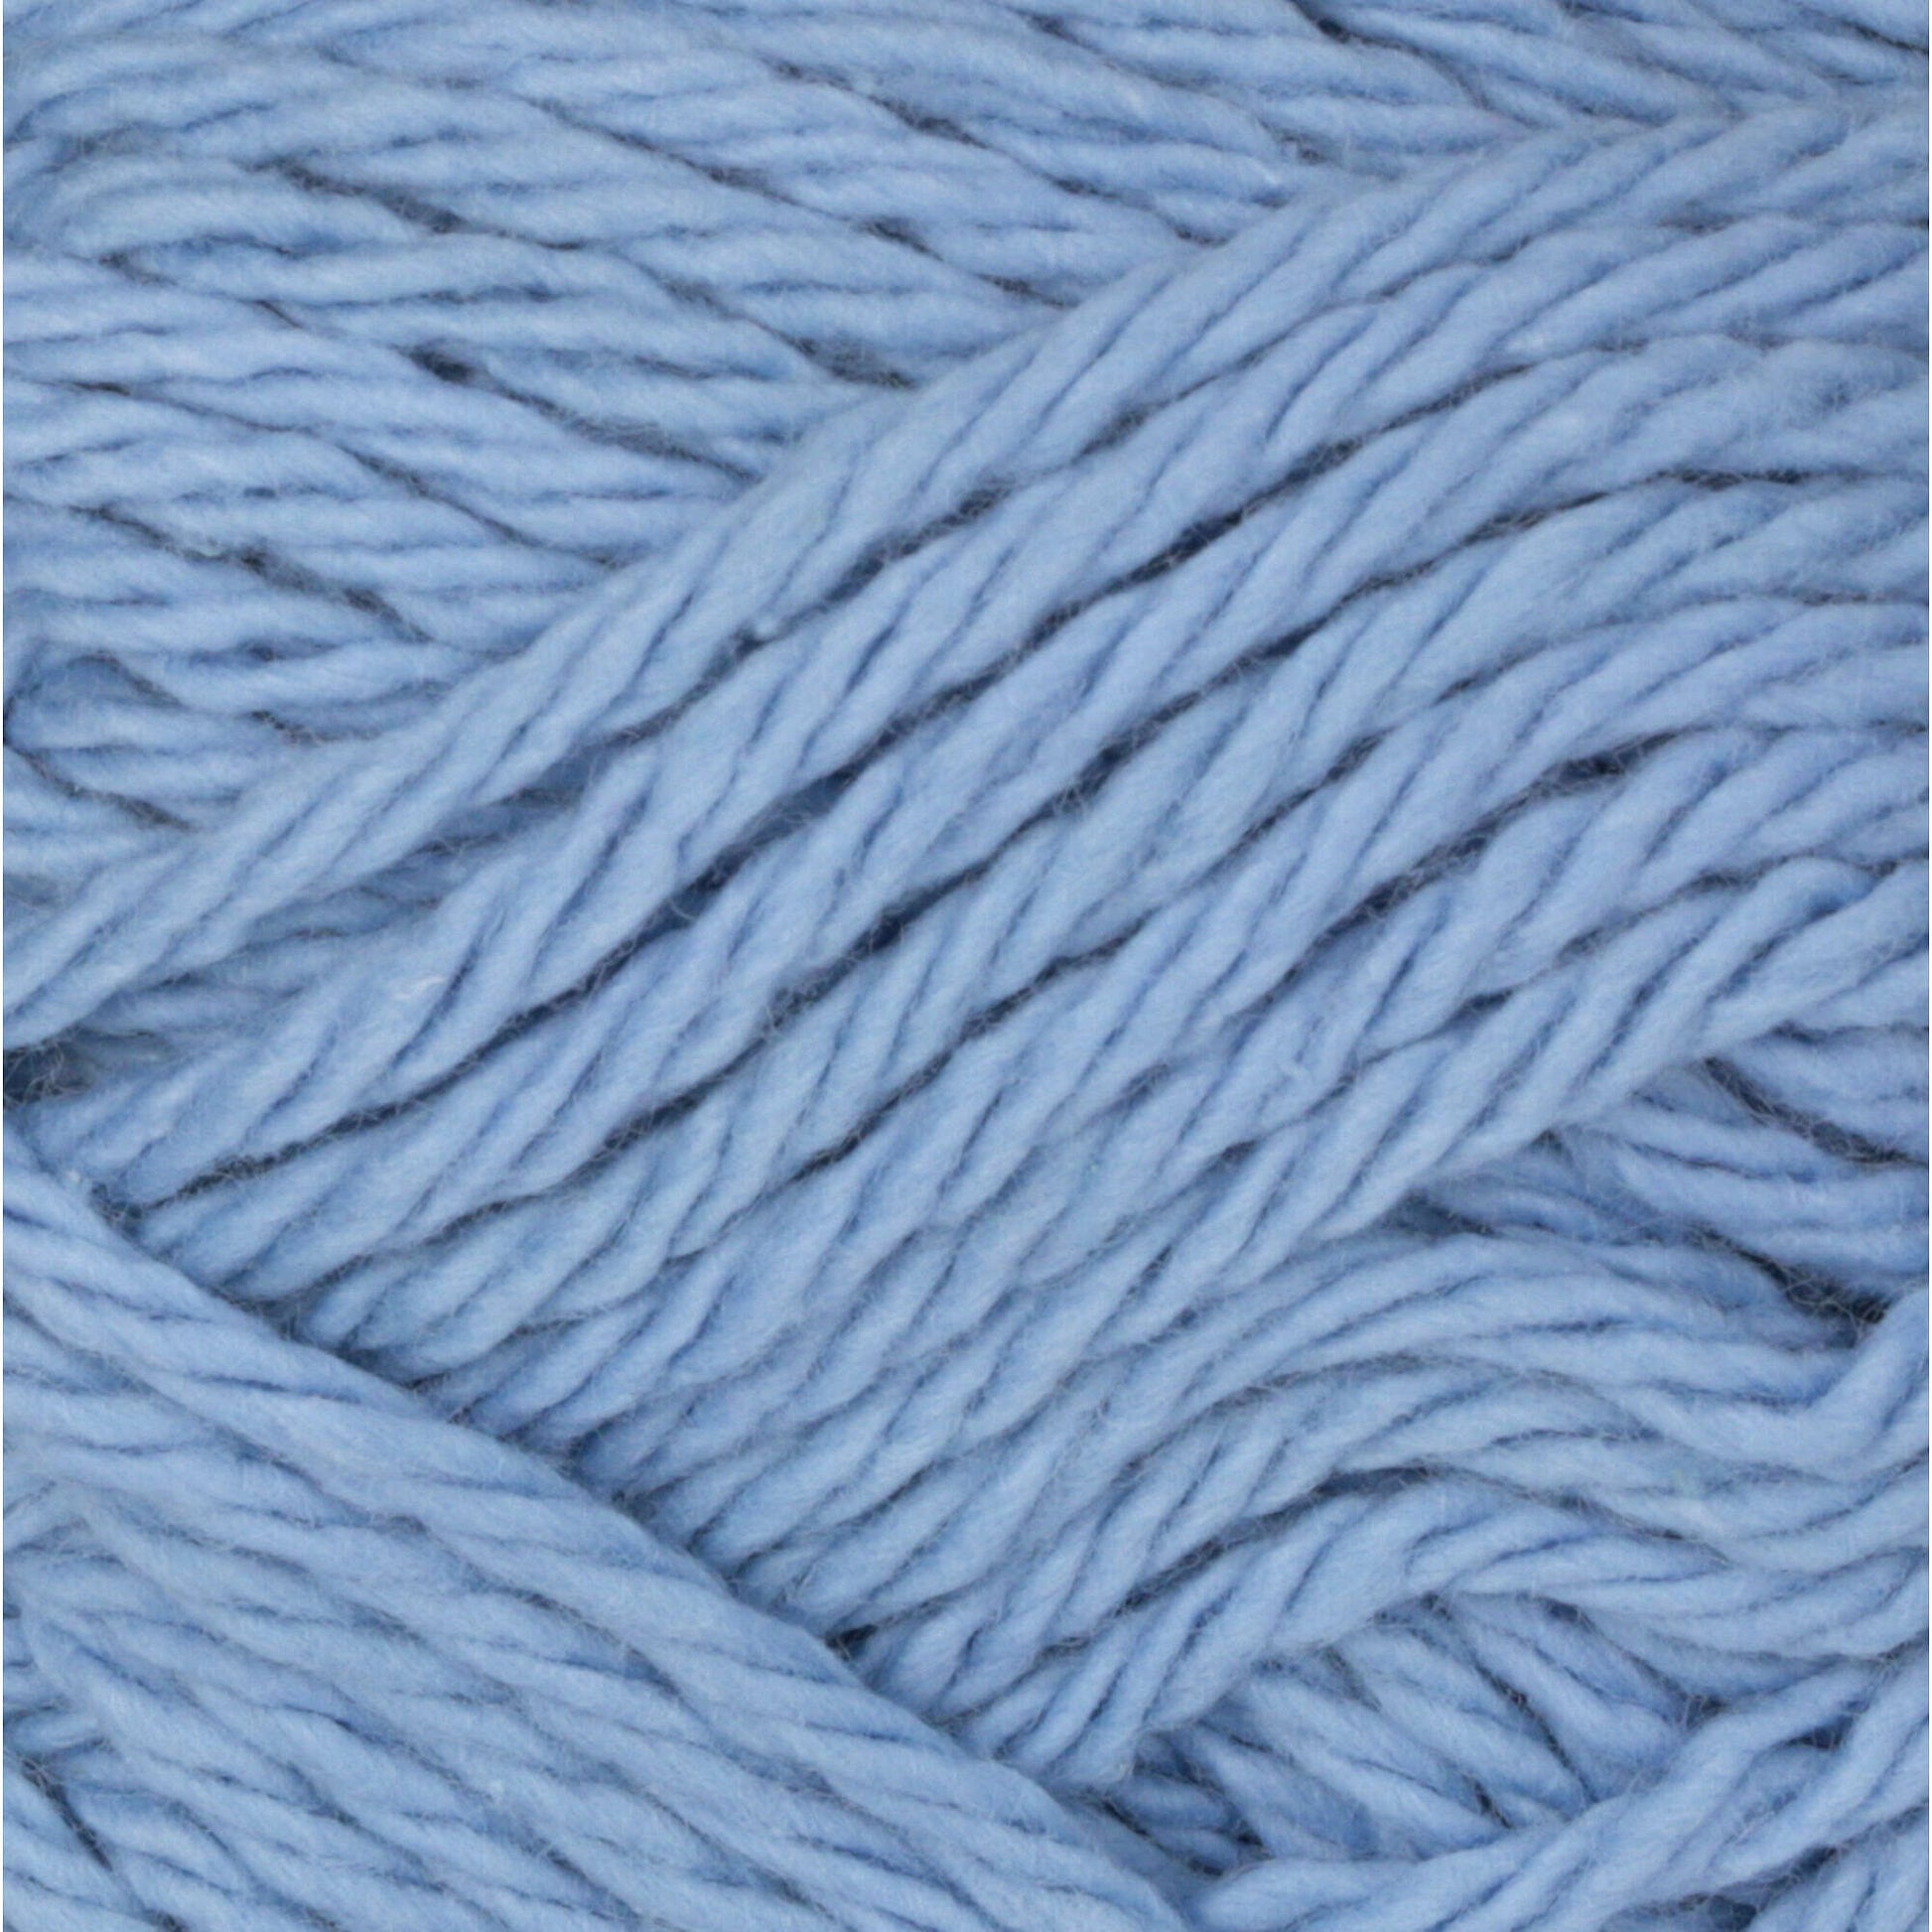 Bernat Handicrafter Cotton Yarn French Blue